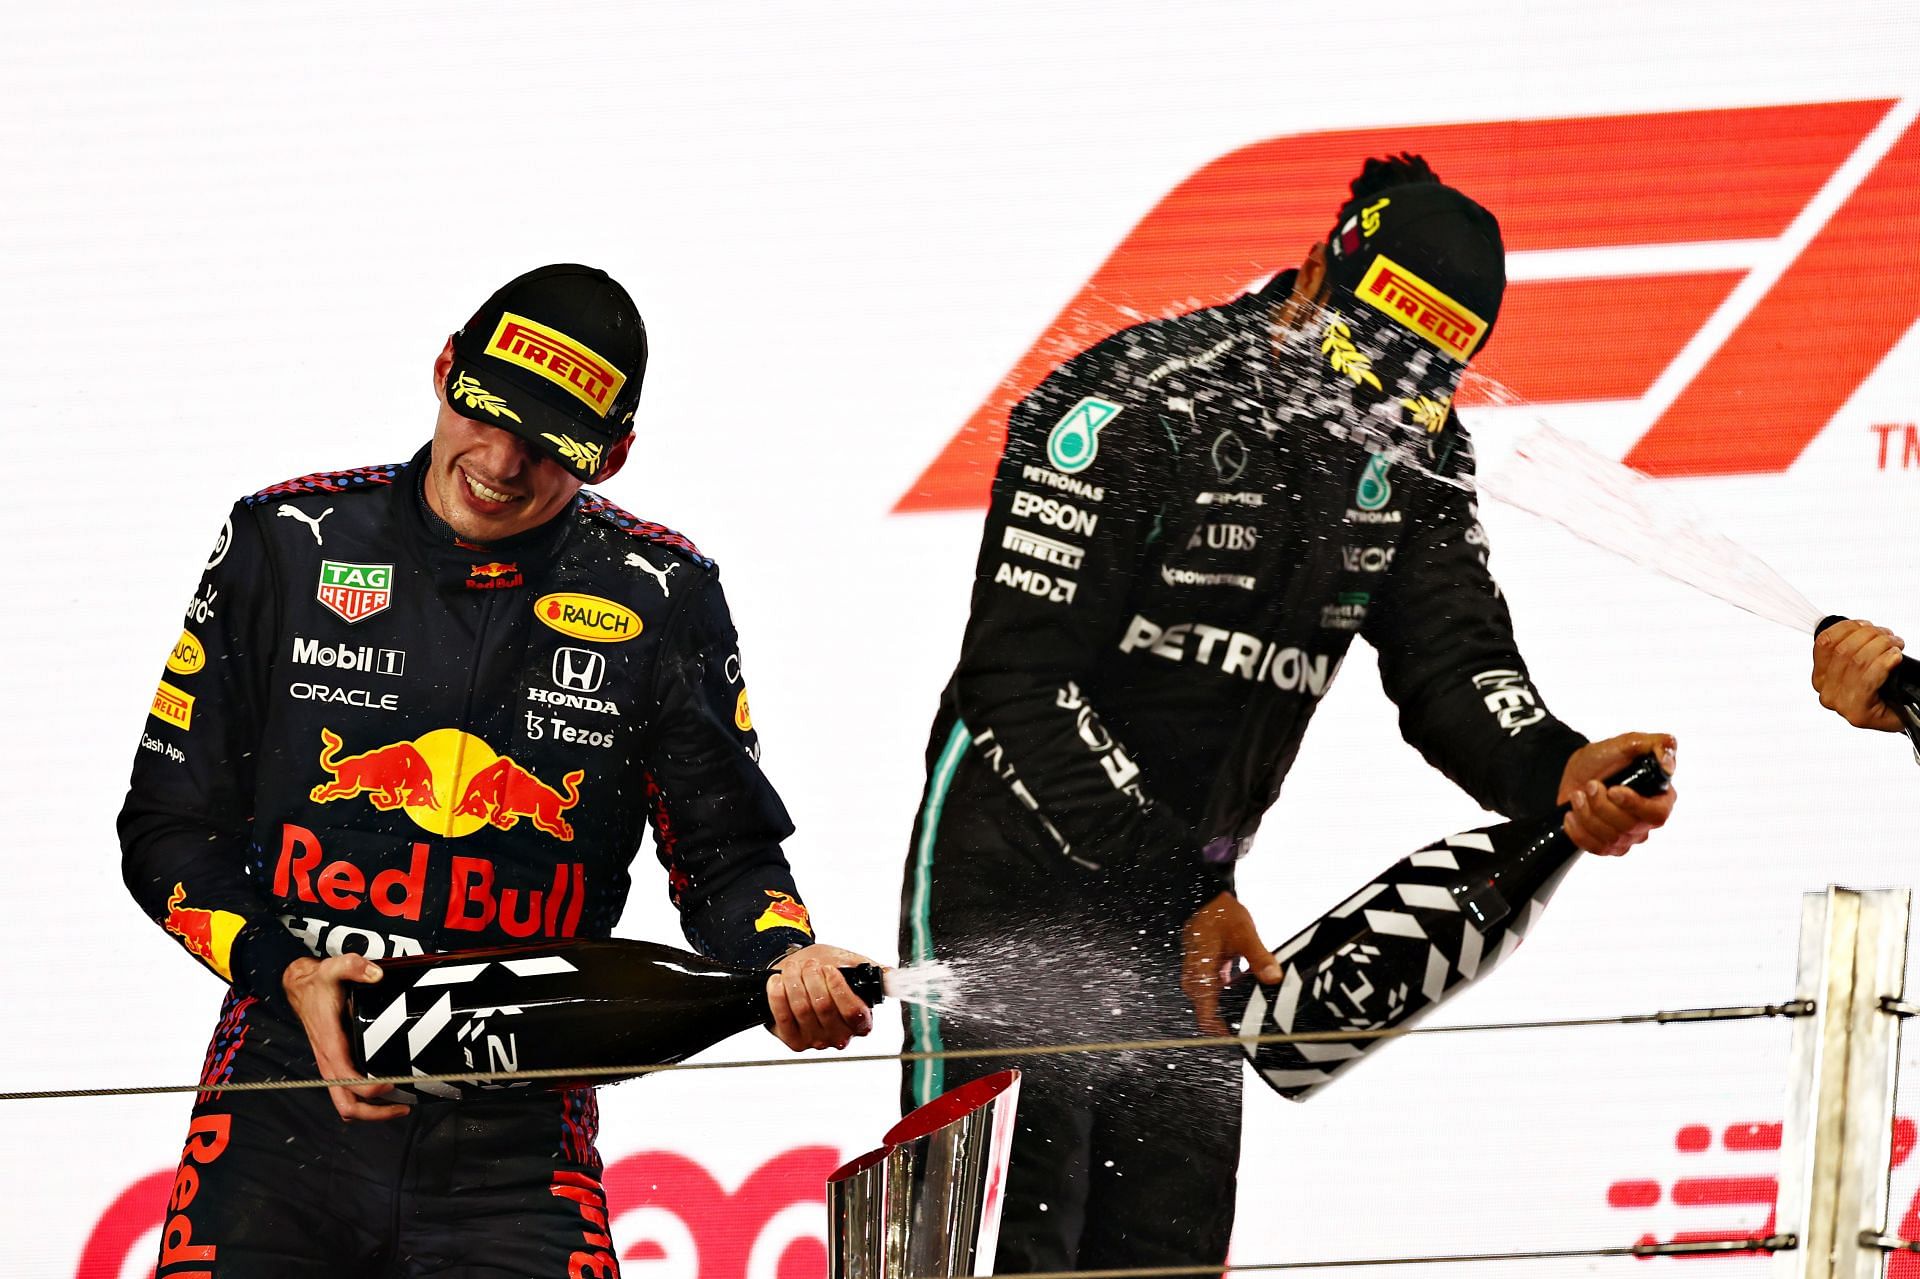 F1 Grand Prix of Qatar - Max Verstappen (L) and Lewis Hamilton celebrate on the podium.